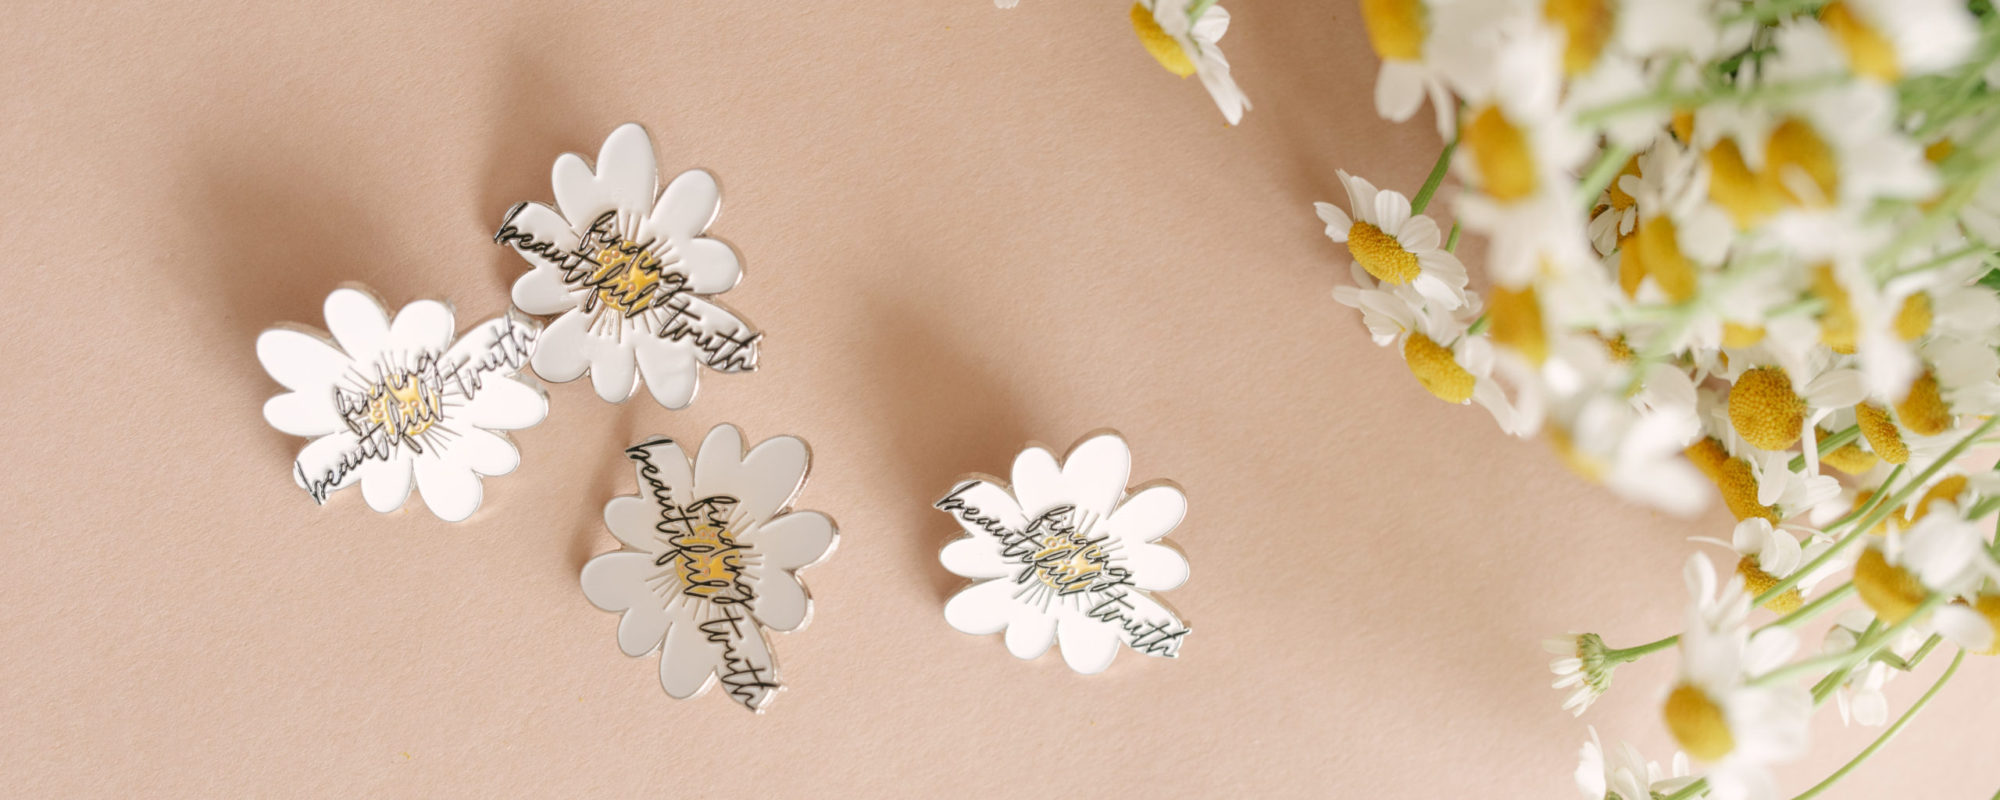 the daisy enamel pin | Finding Beautiful Truth